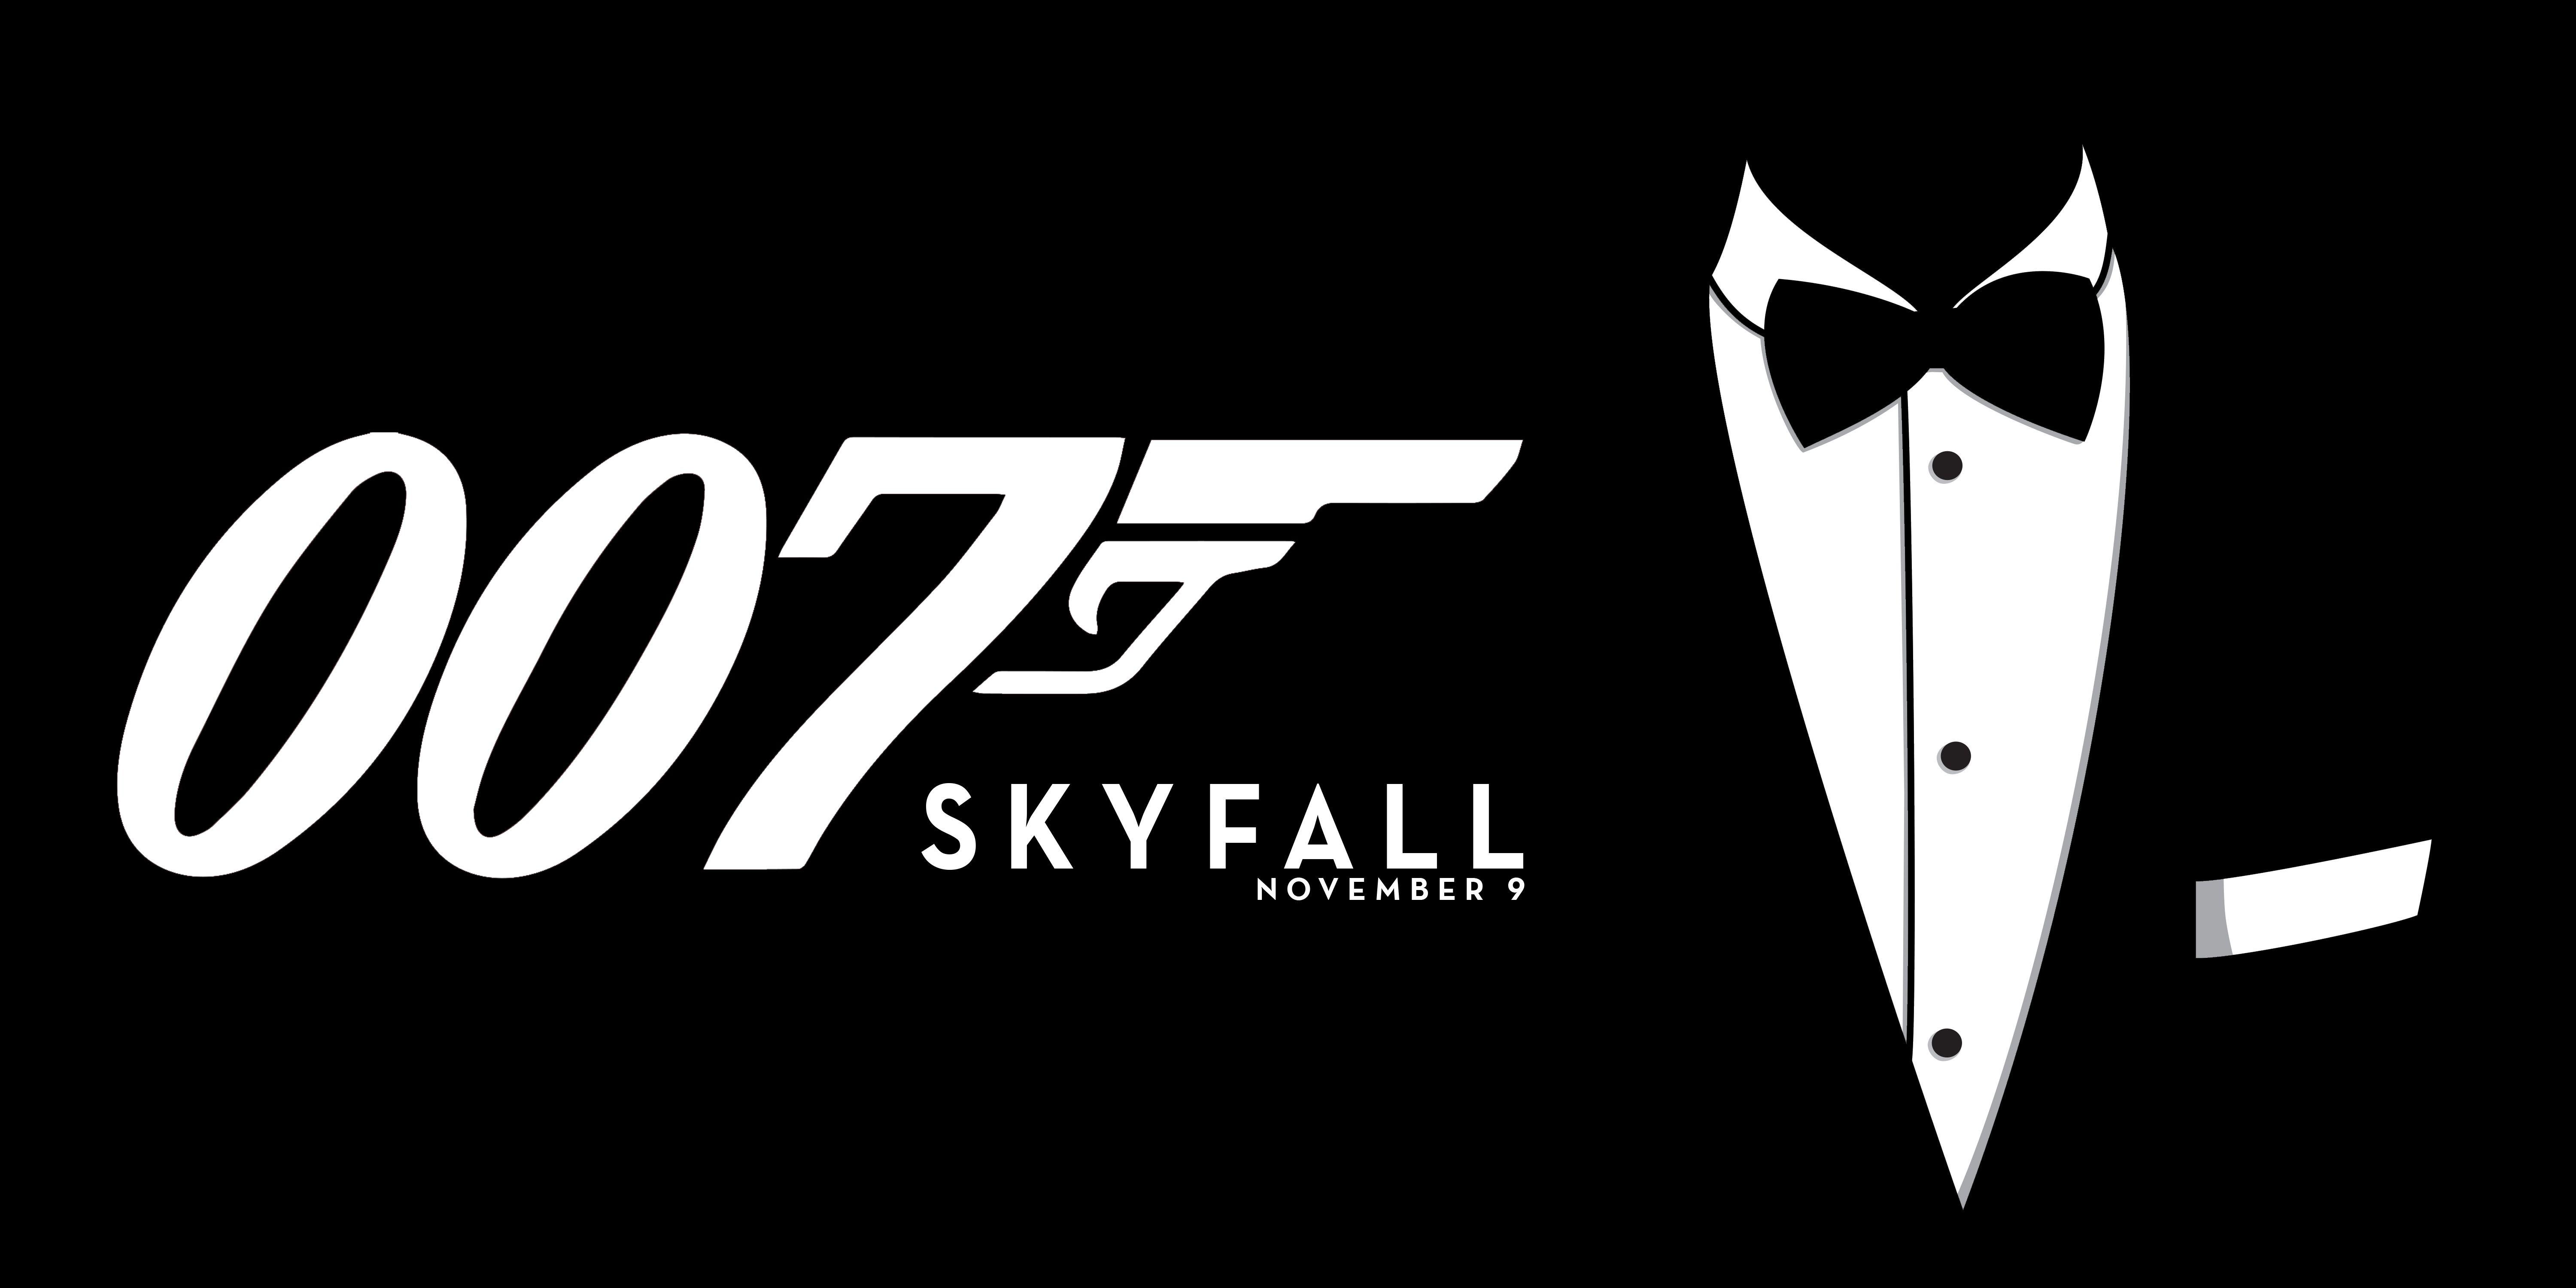 James Bond 007 Wallpaper. Butler Birthday party